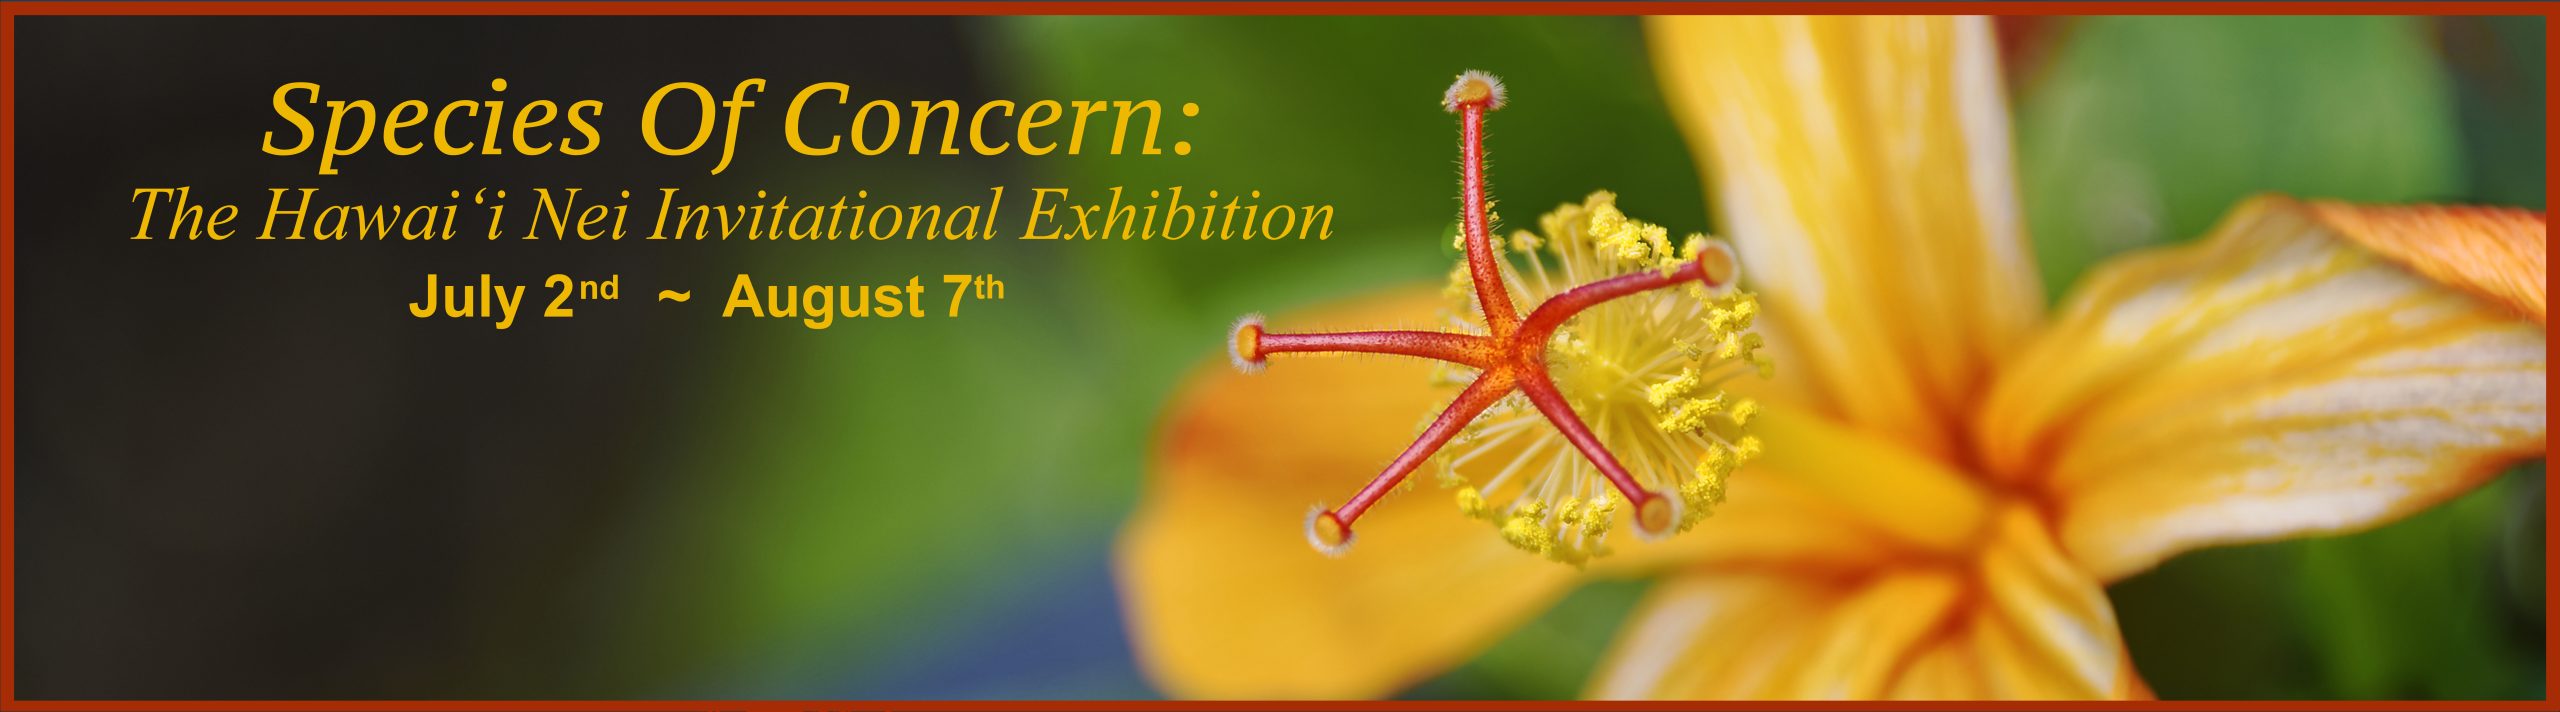 Species of Concern: The Hawaii Nei Invitation Exhibition